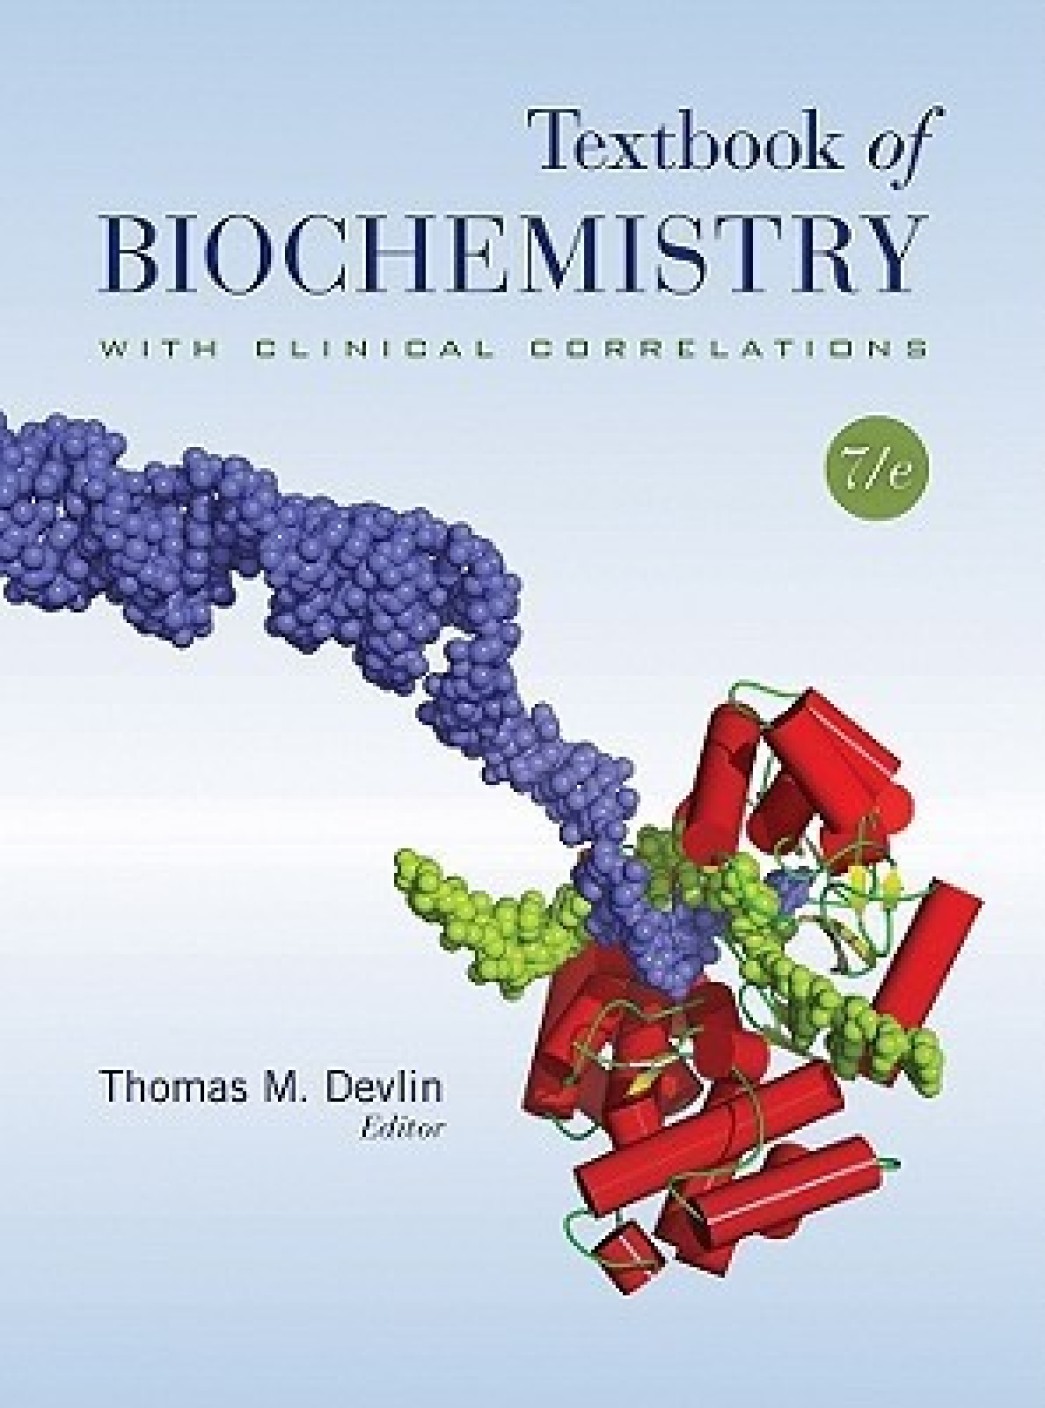 lehninger principles of biochemistry pdf - Scribd india